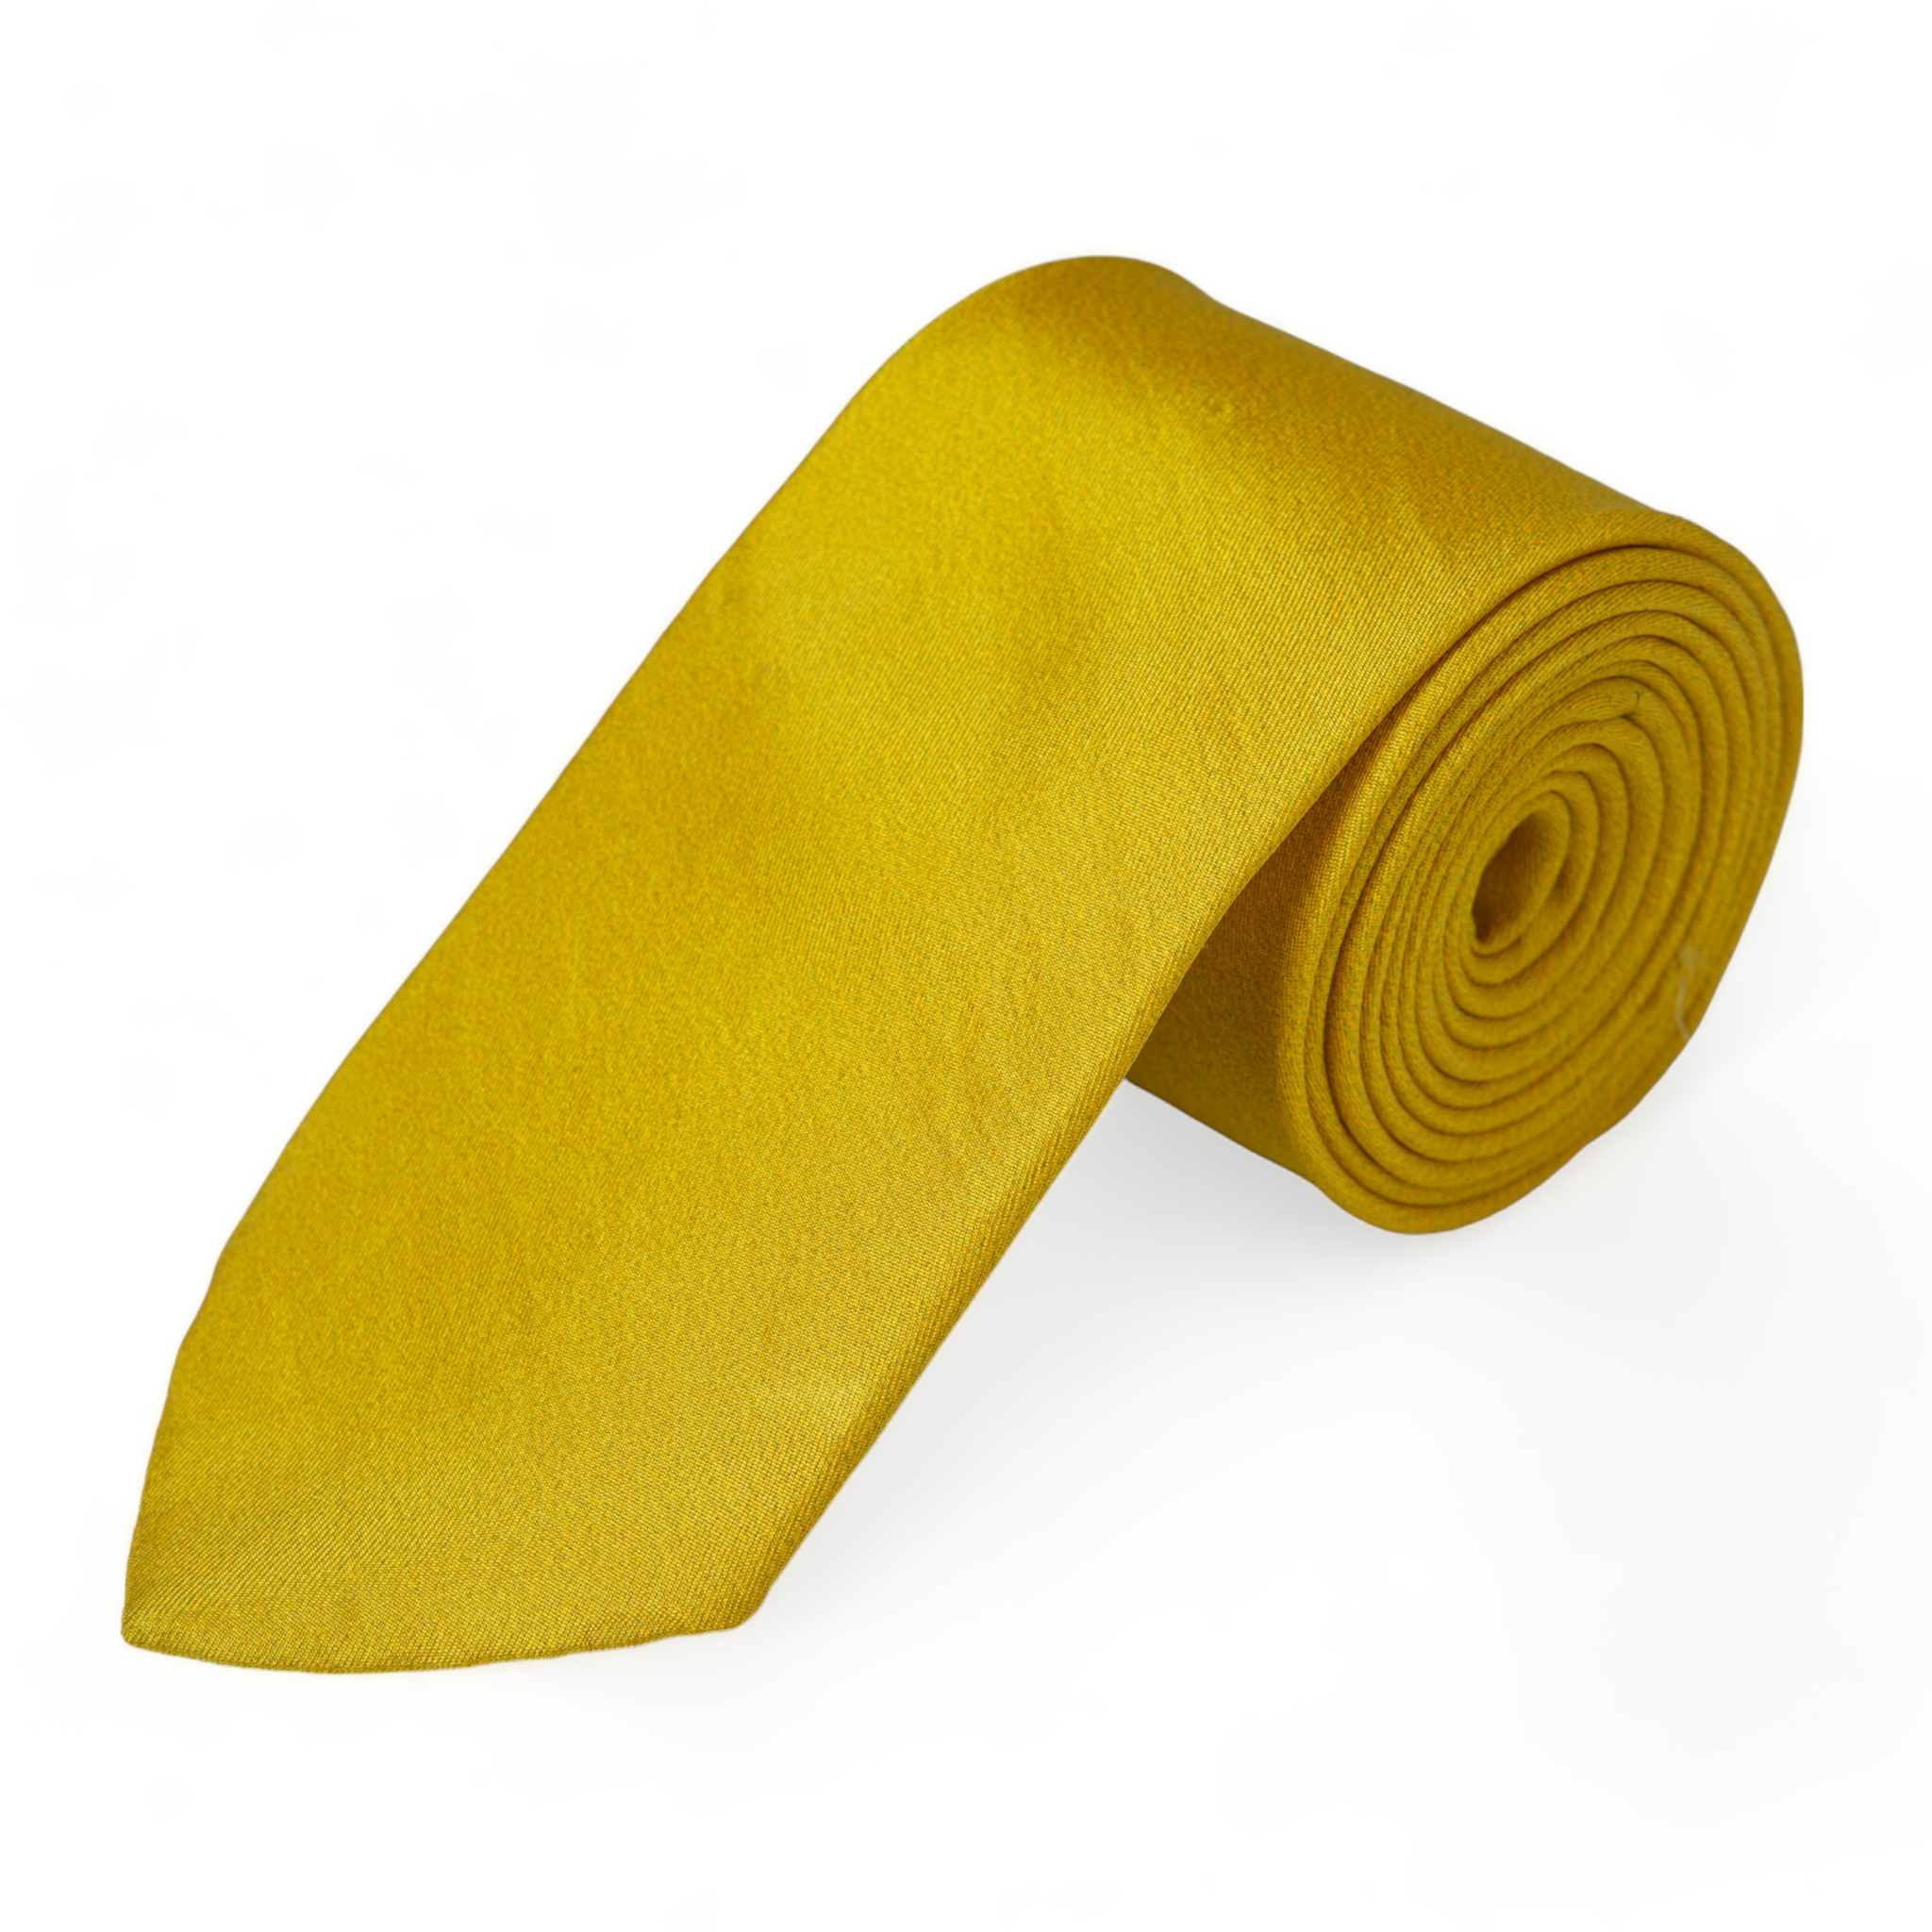 Chokore Gulmarg - Pocket Square & Chokore Yellow Silk Tie - Solids range